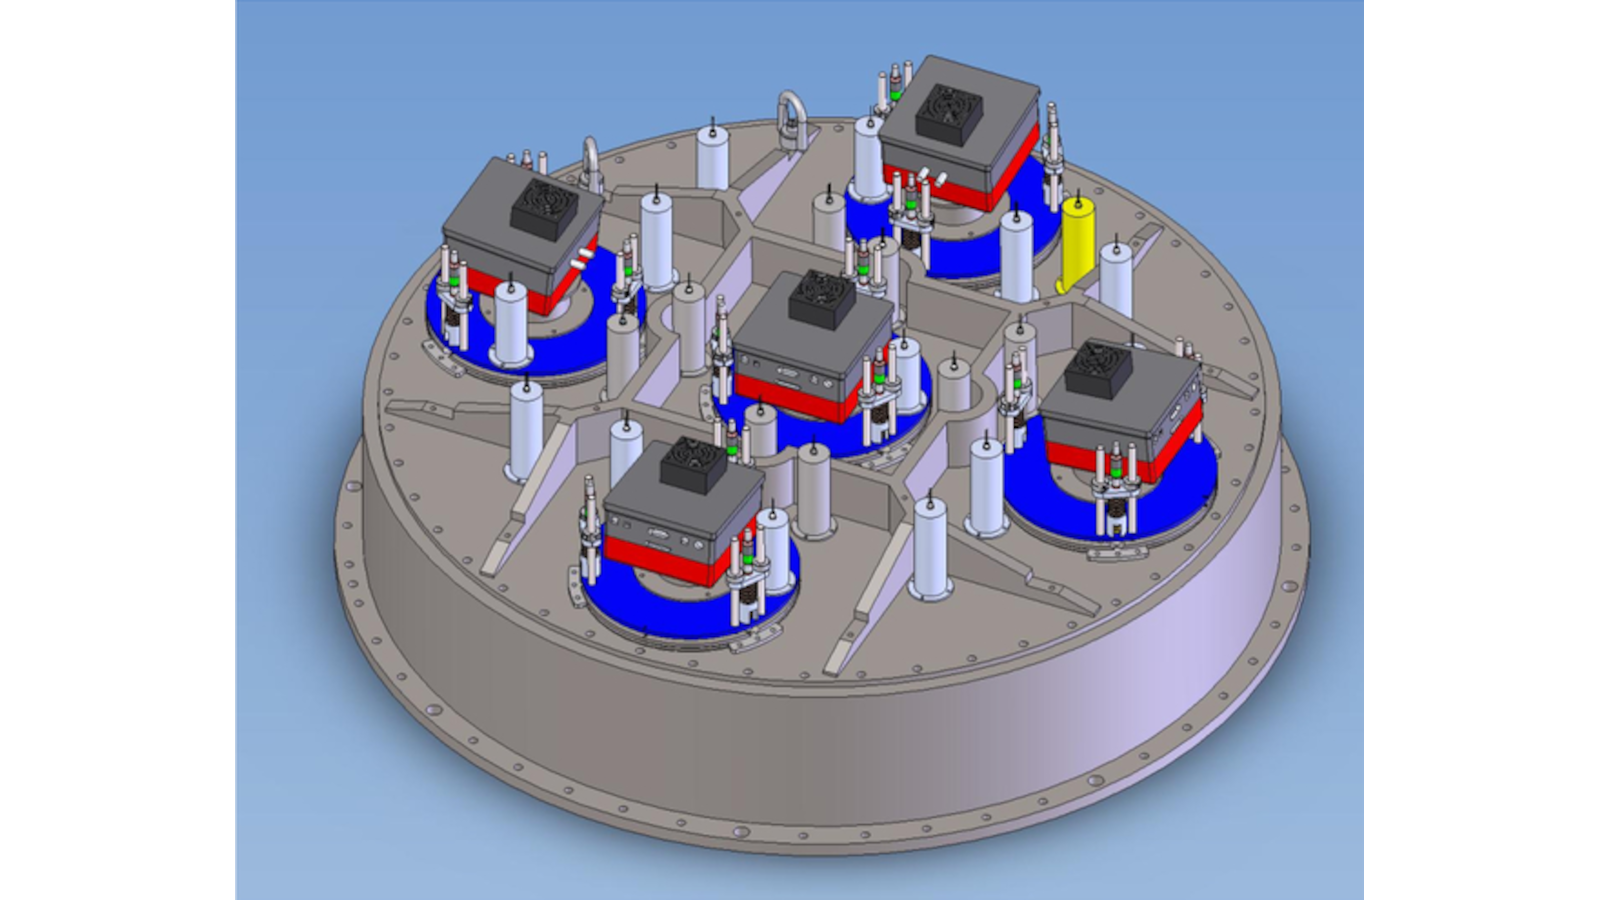 DESI commissioning instrument focal plane assembly design